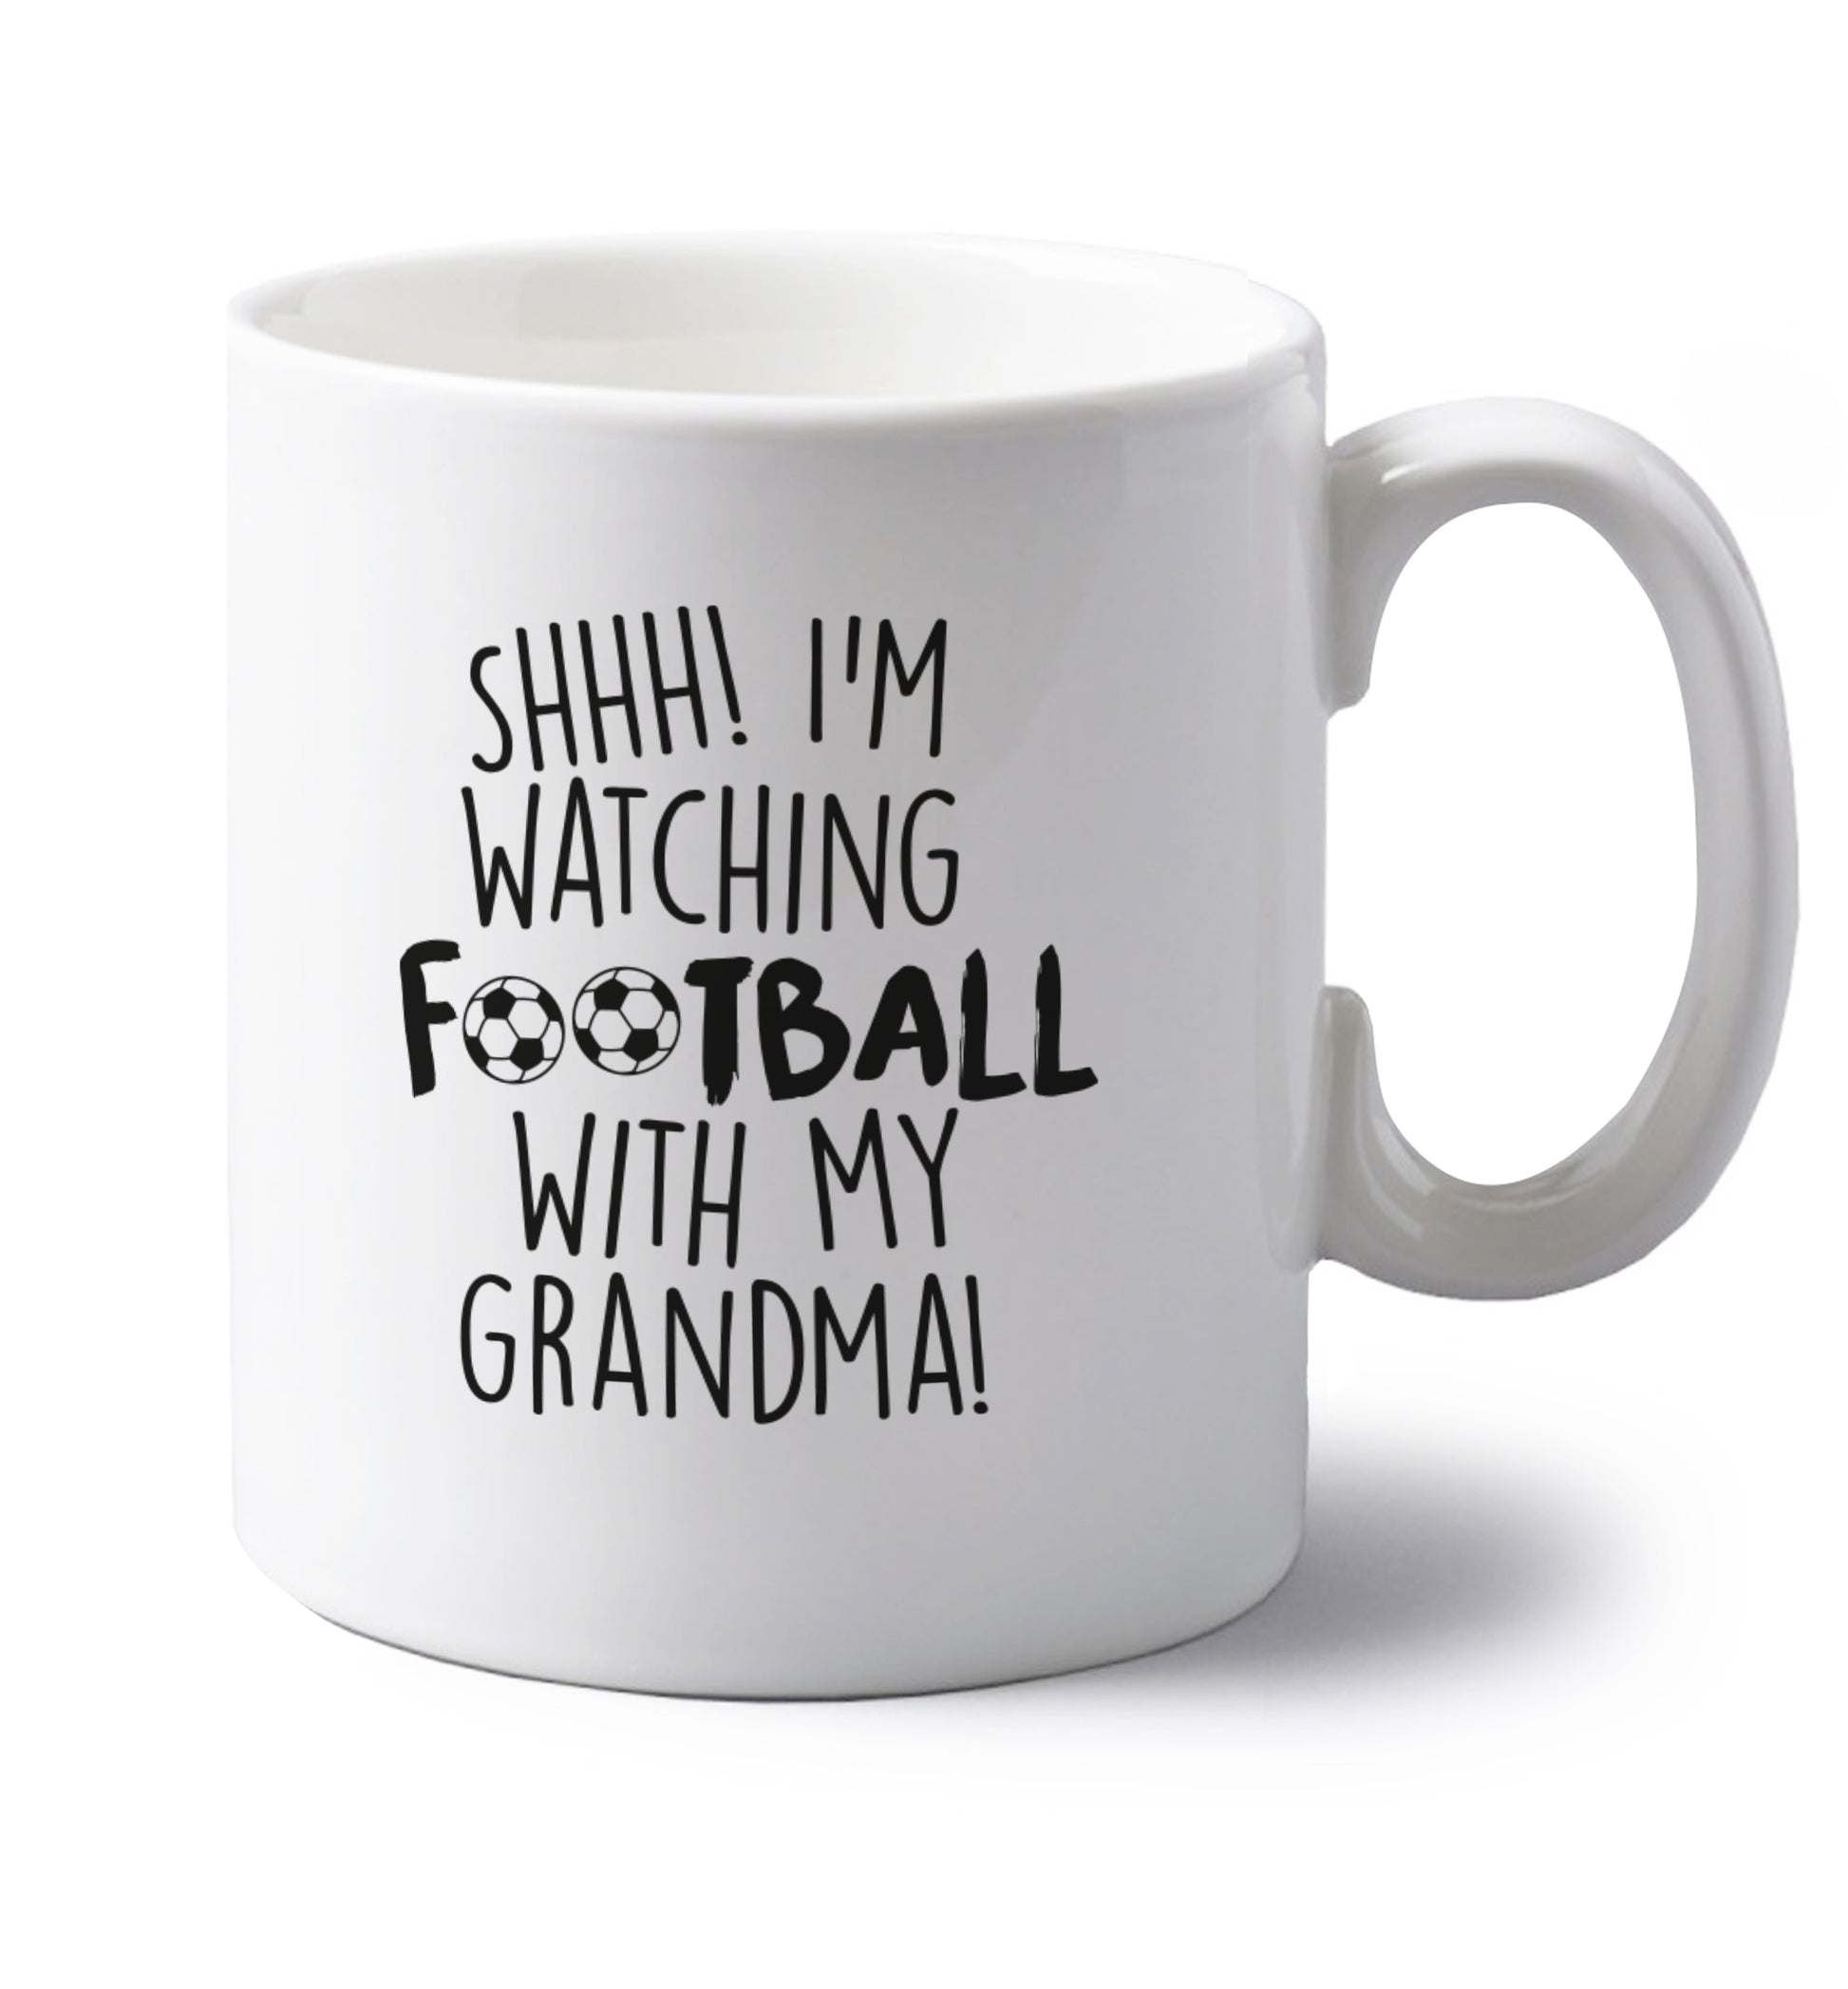 Shhh I'm watching football with my grandma left handed white ceramic mug 